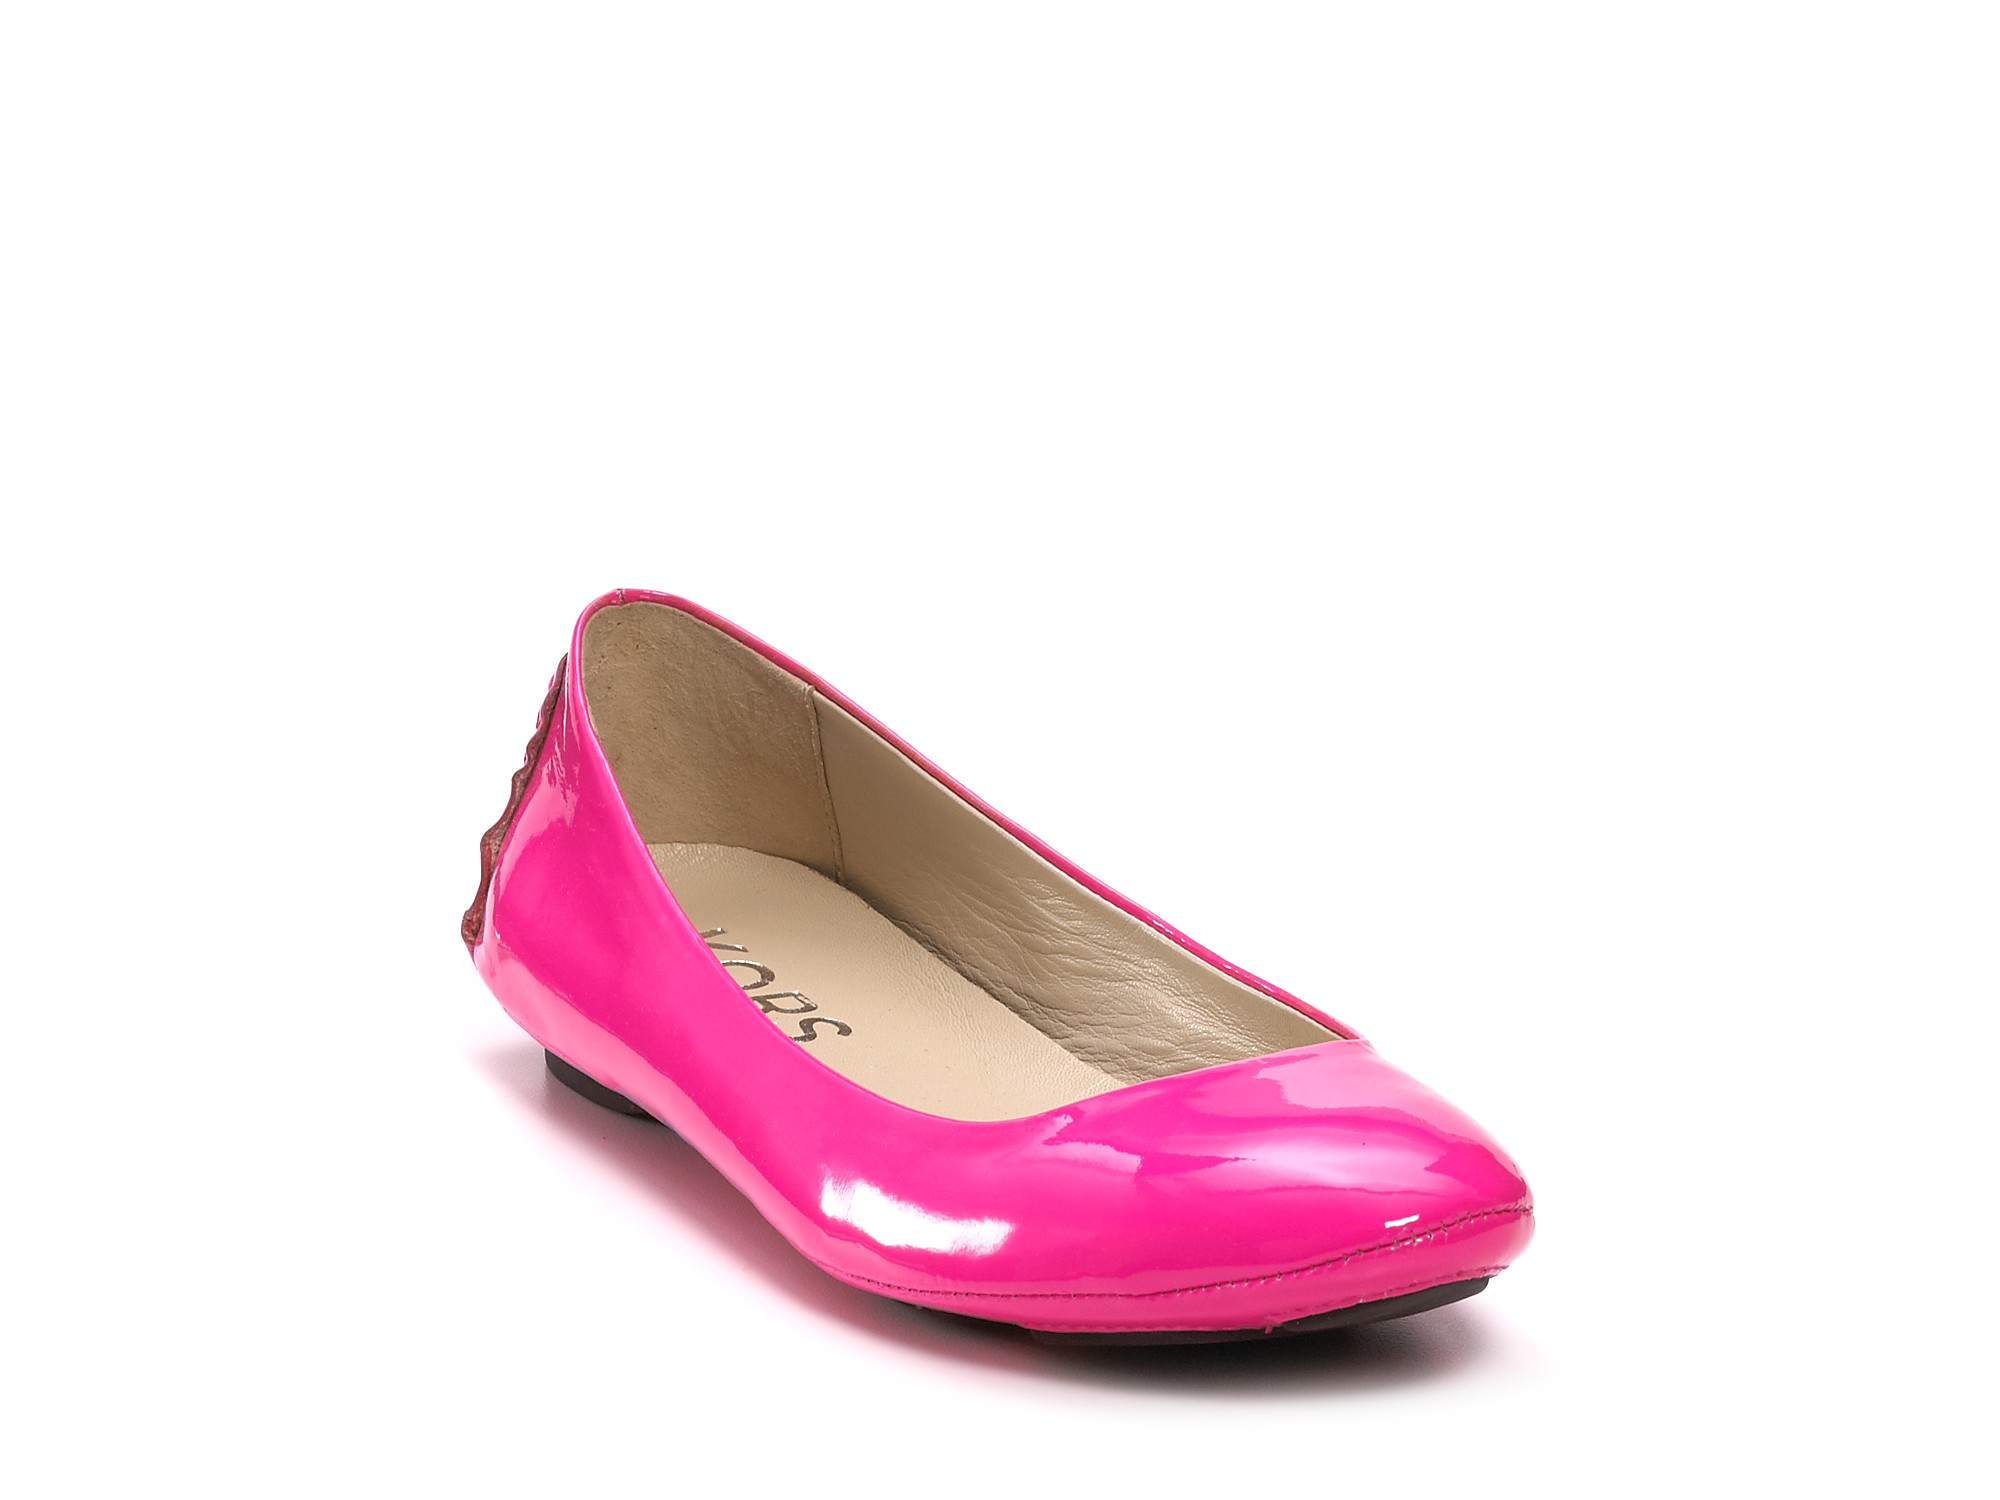 Michael Kors Kors Odette Flats in Pink (neon pink patent